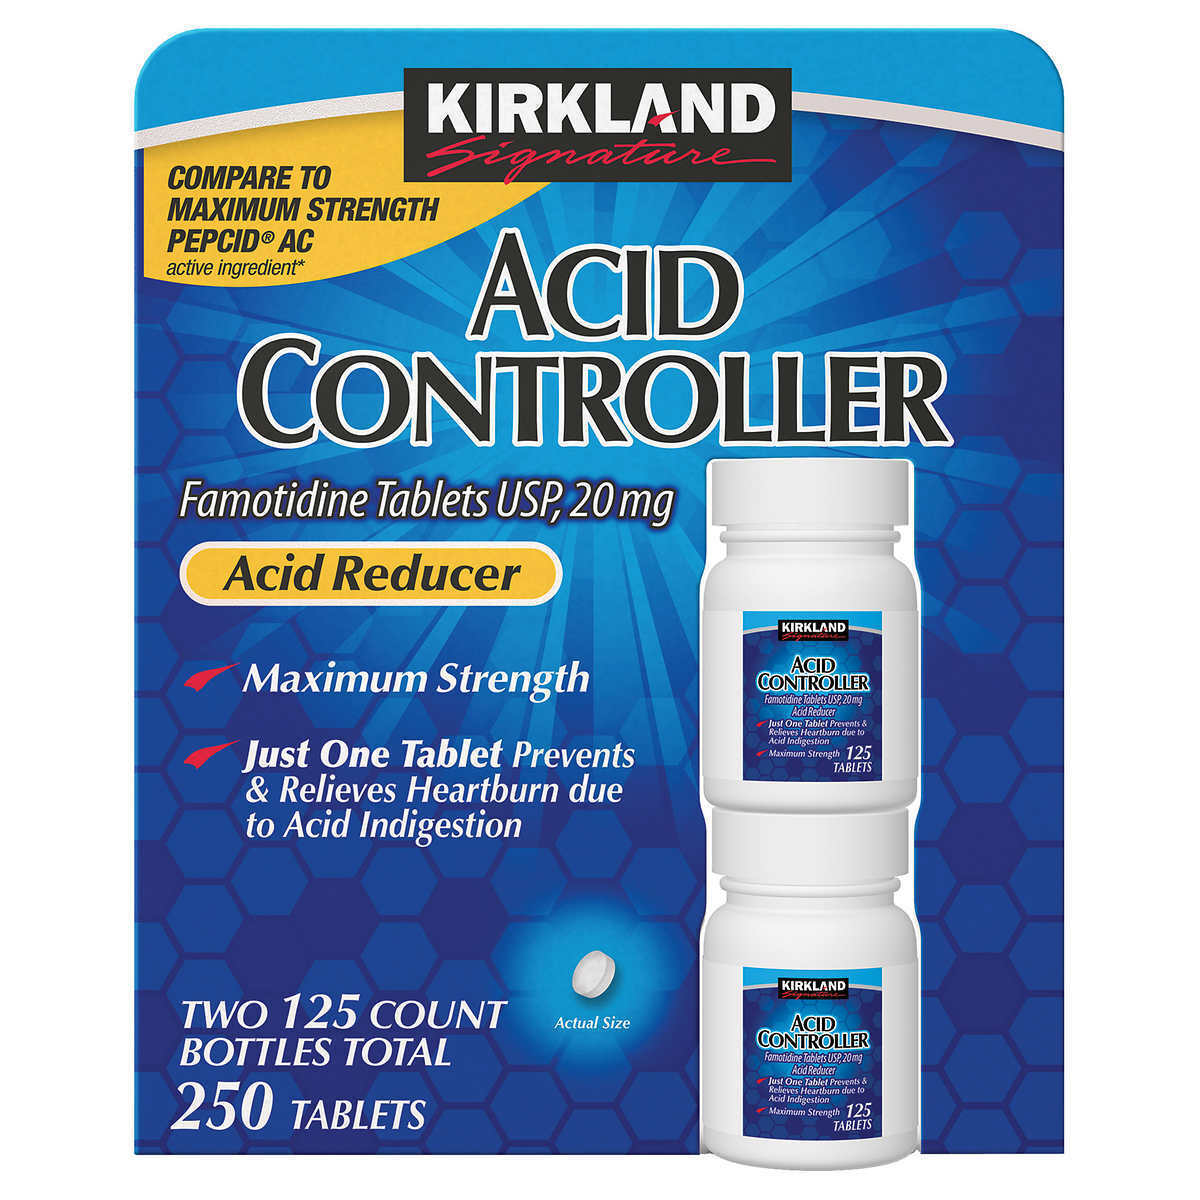 Kirkland Signature Acid Controller Famotidine 20mg-Maximum Strength 250 Tablets